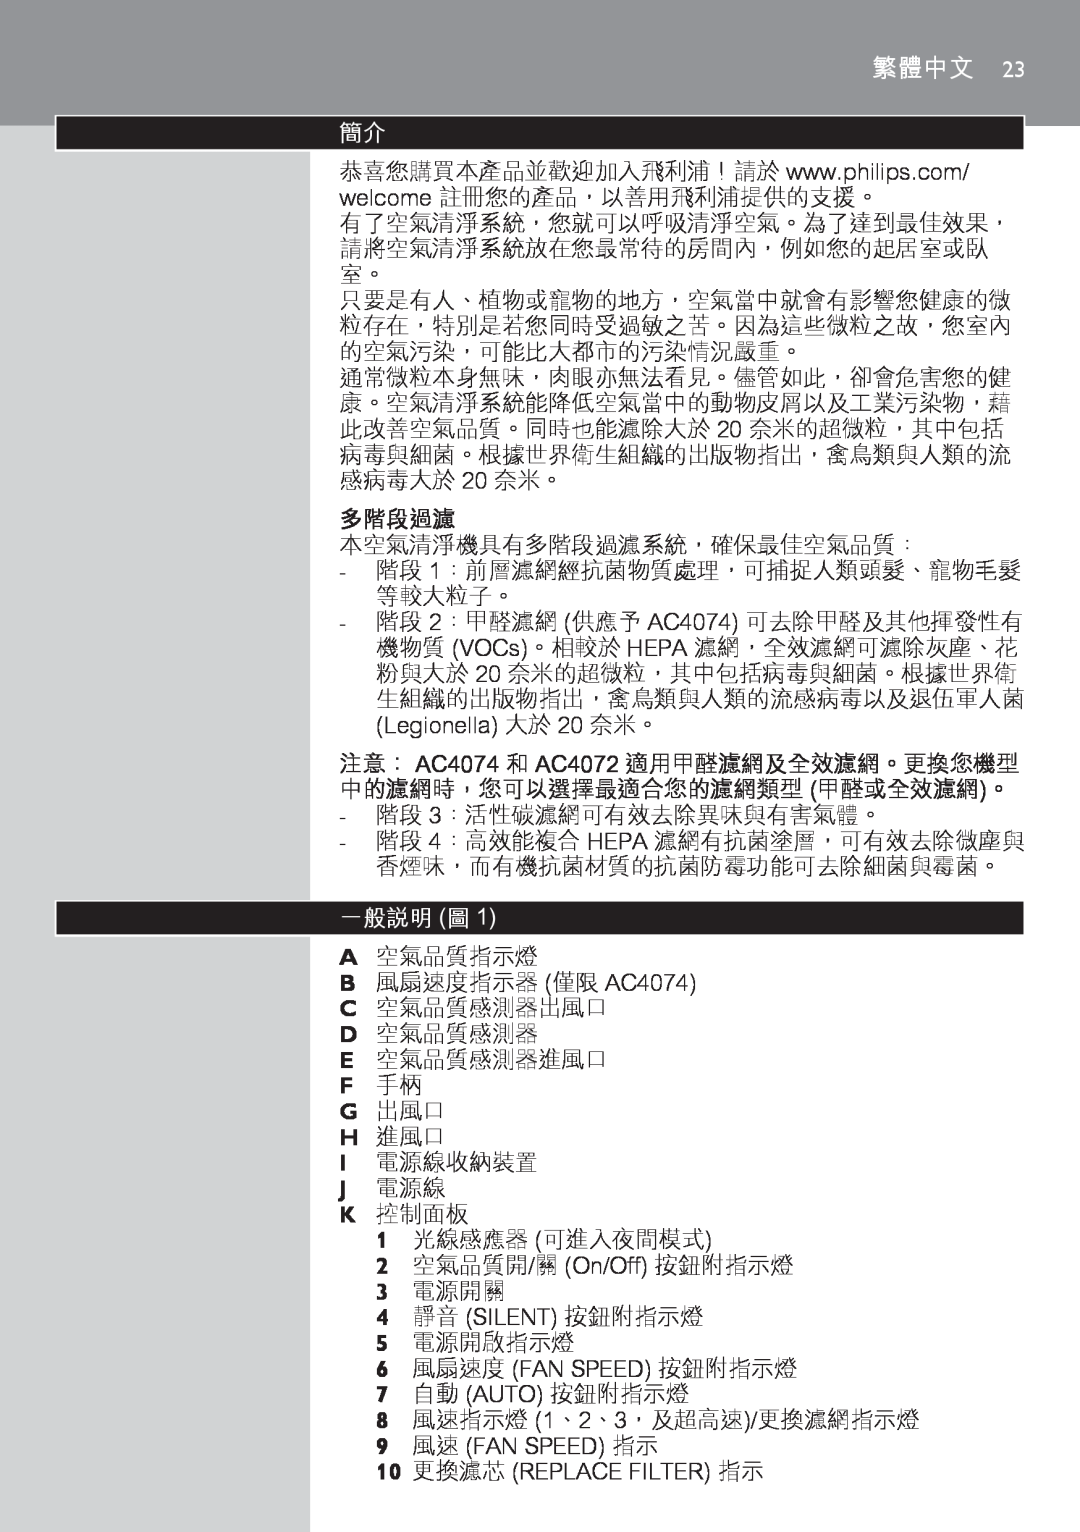 Philips AC4074 manual 多階段過濾, 一般說明圖1, 繁體中文 